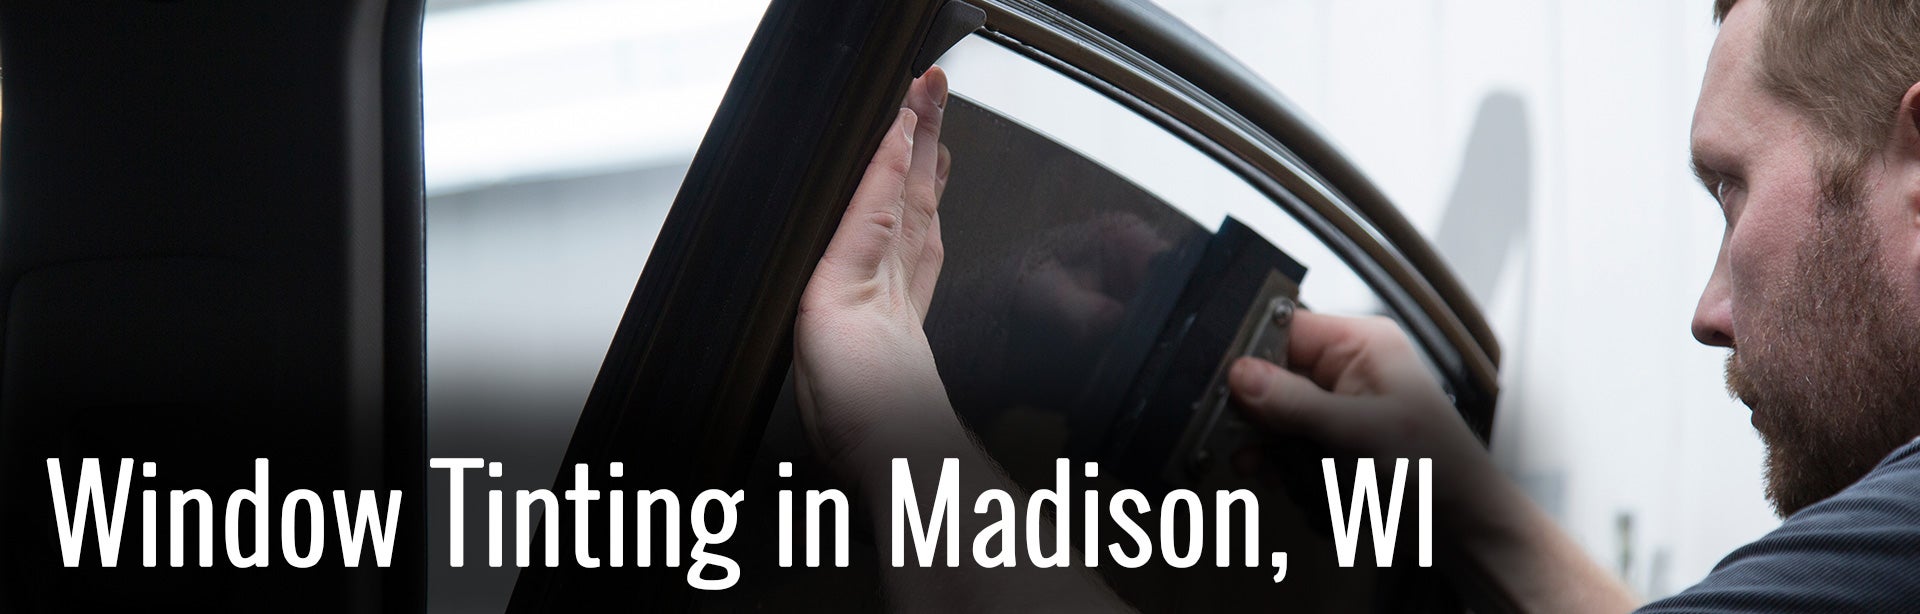 Window Tinting Service, Madison WI, Middleton